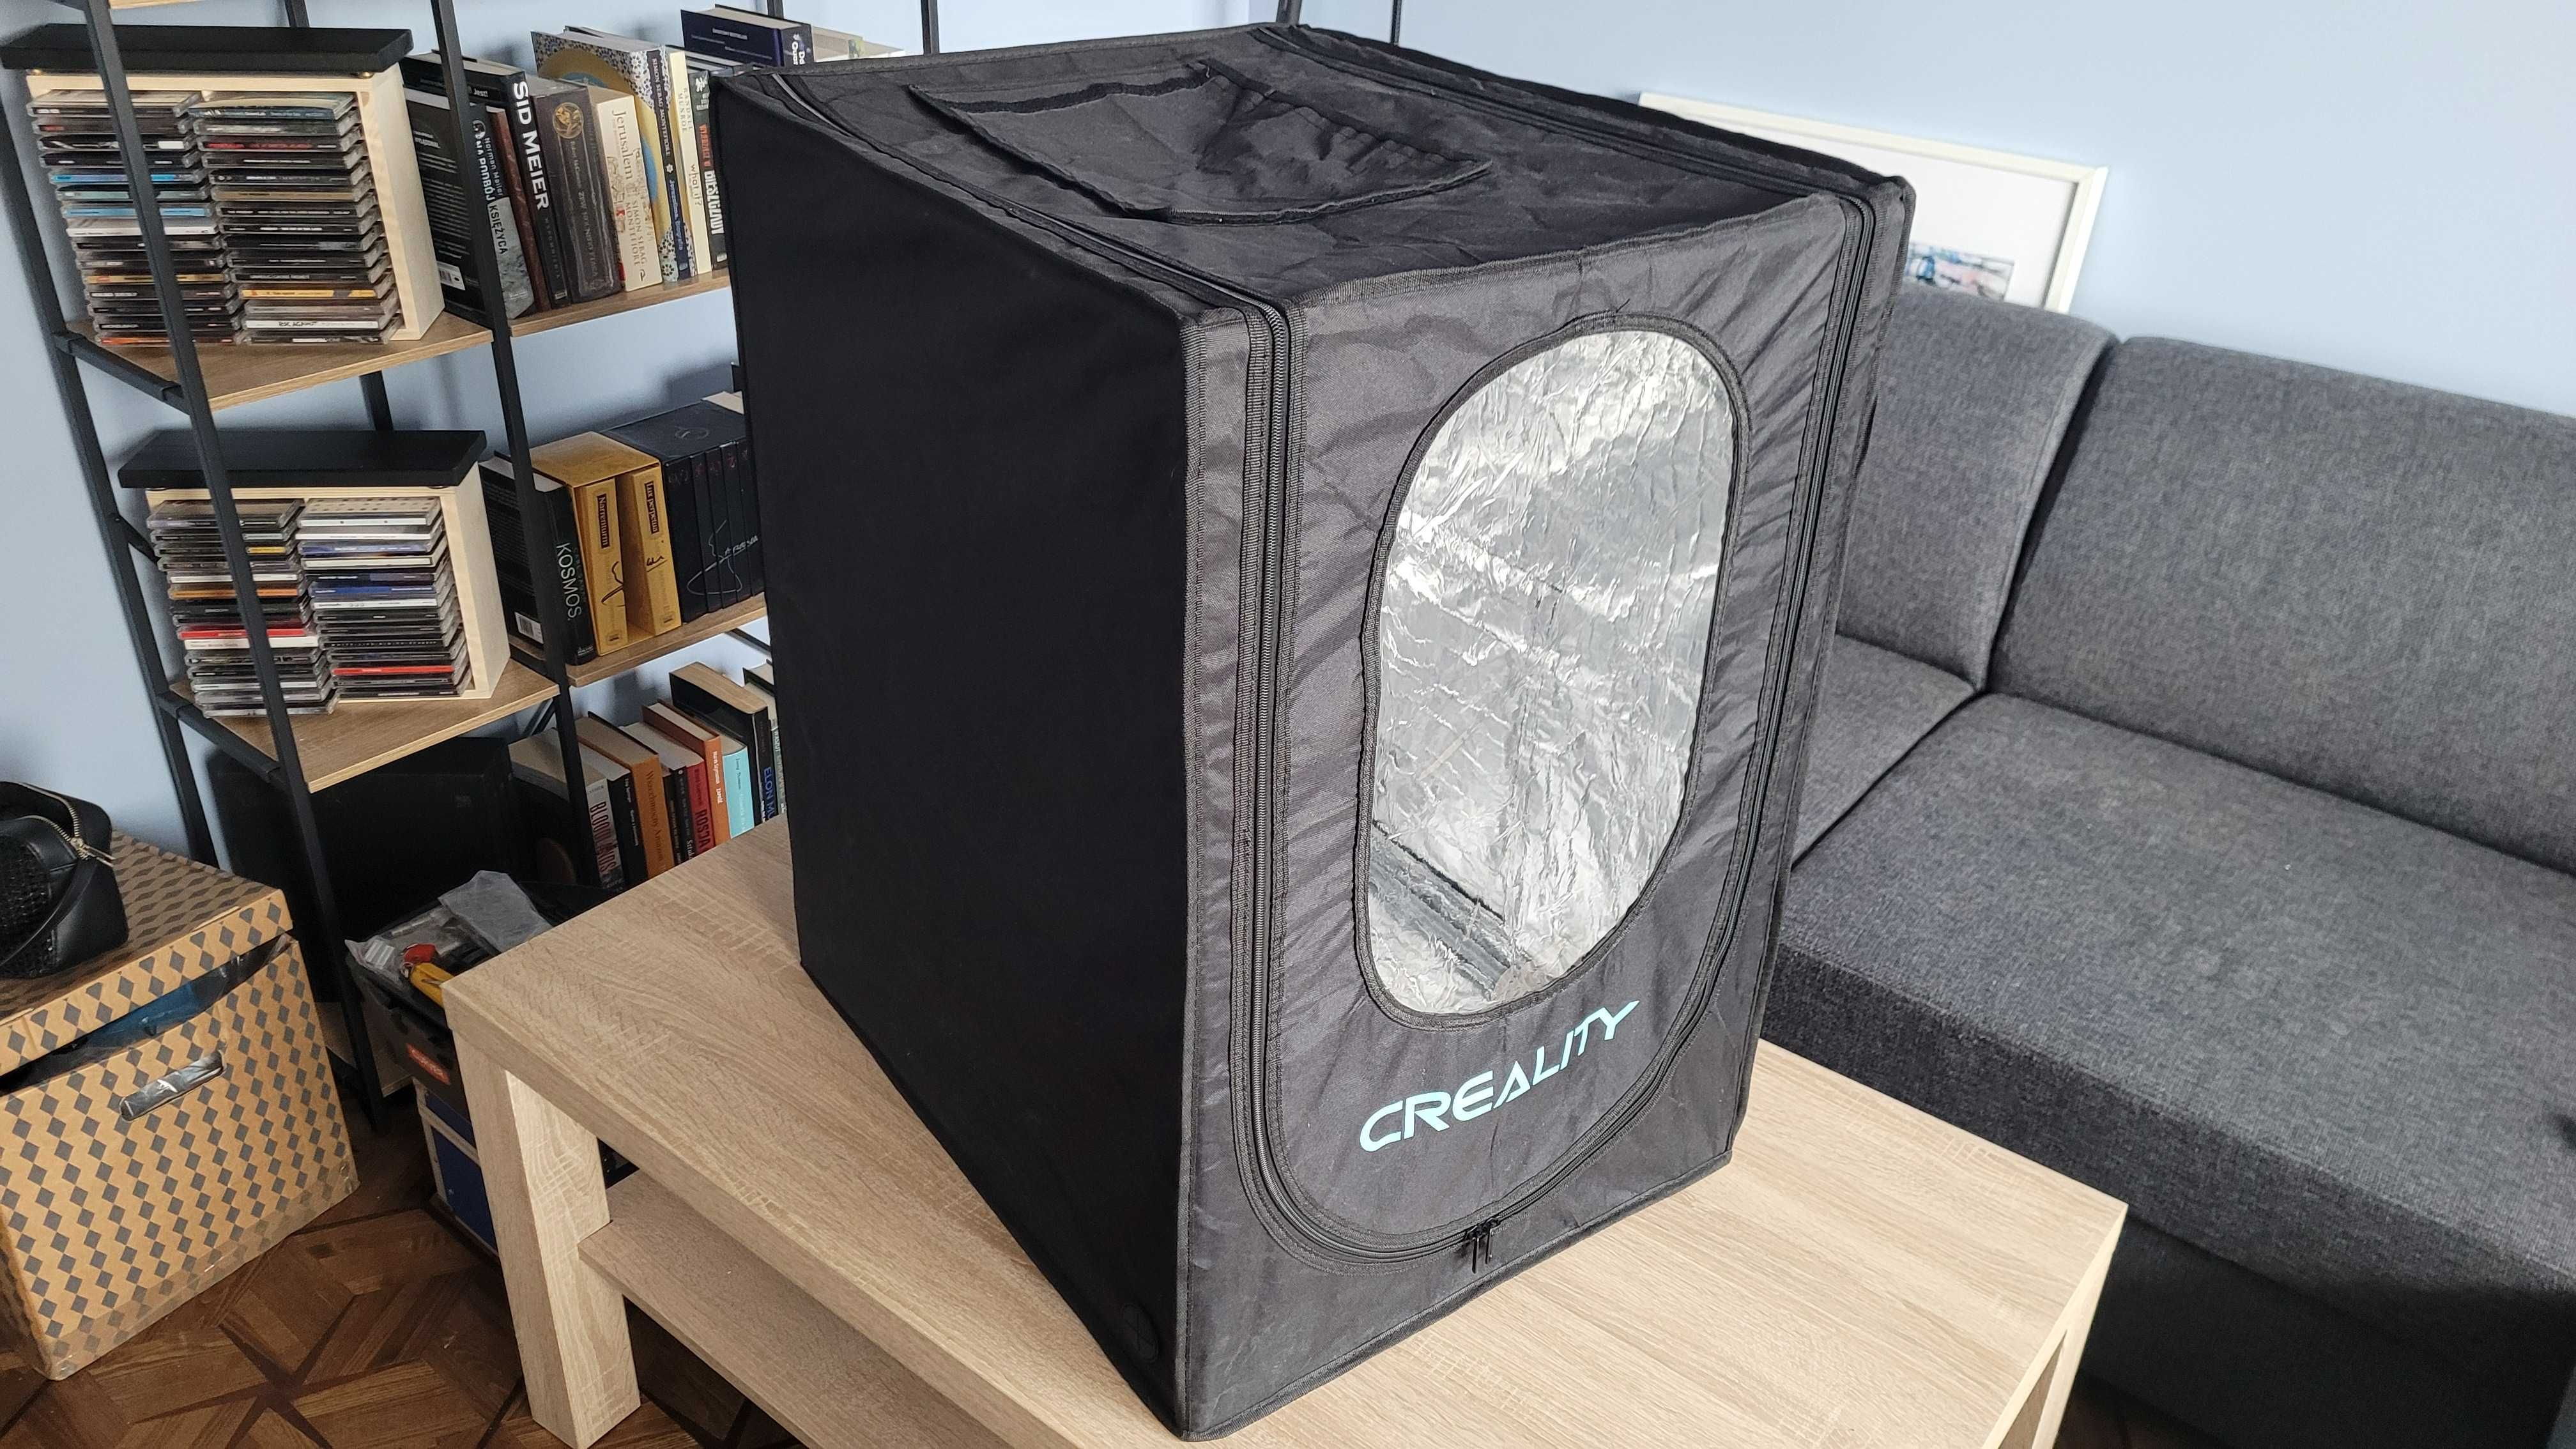 Namiot obudowa do Creality Ender-5 Ender-3 v2 drukarki 3d 48x60x72cm